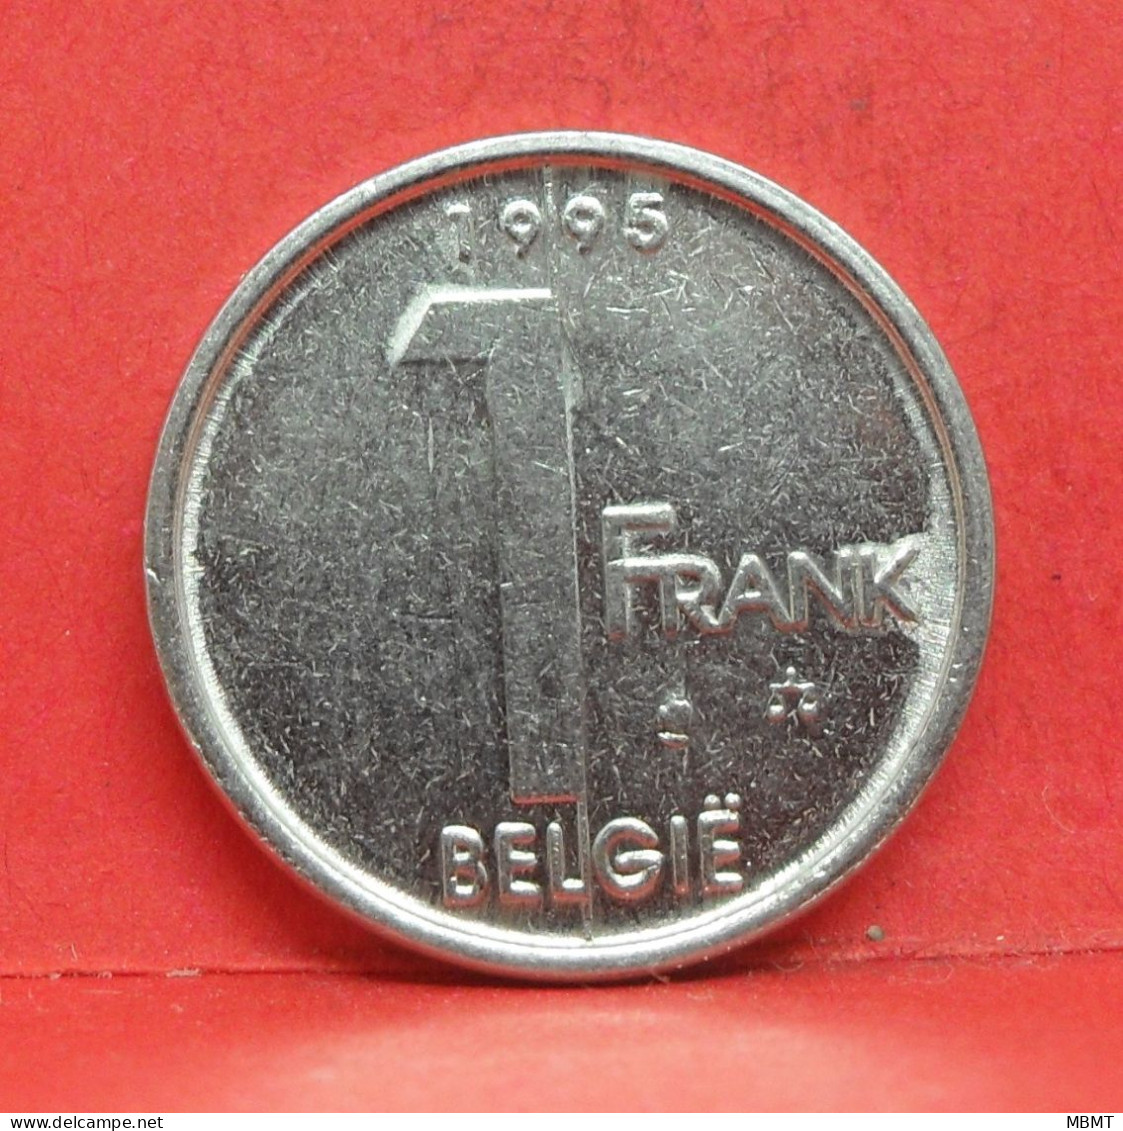 1 Frank 1995 - TTB - Pièce Monnaie Belgie - Article N°1969 - 1 Frank